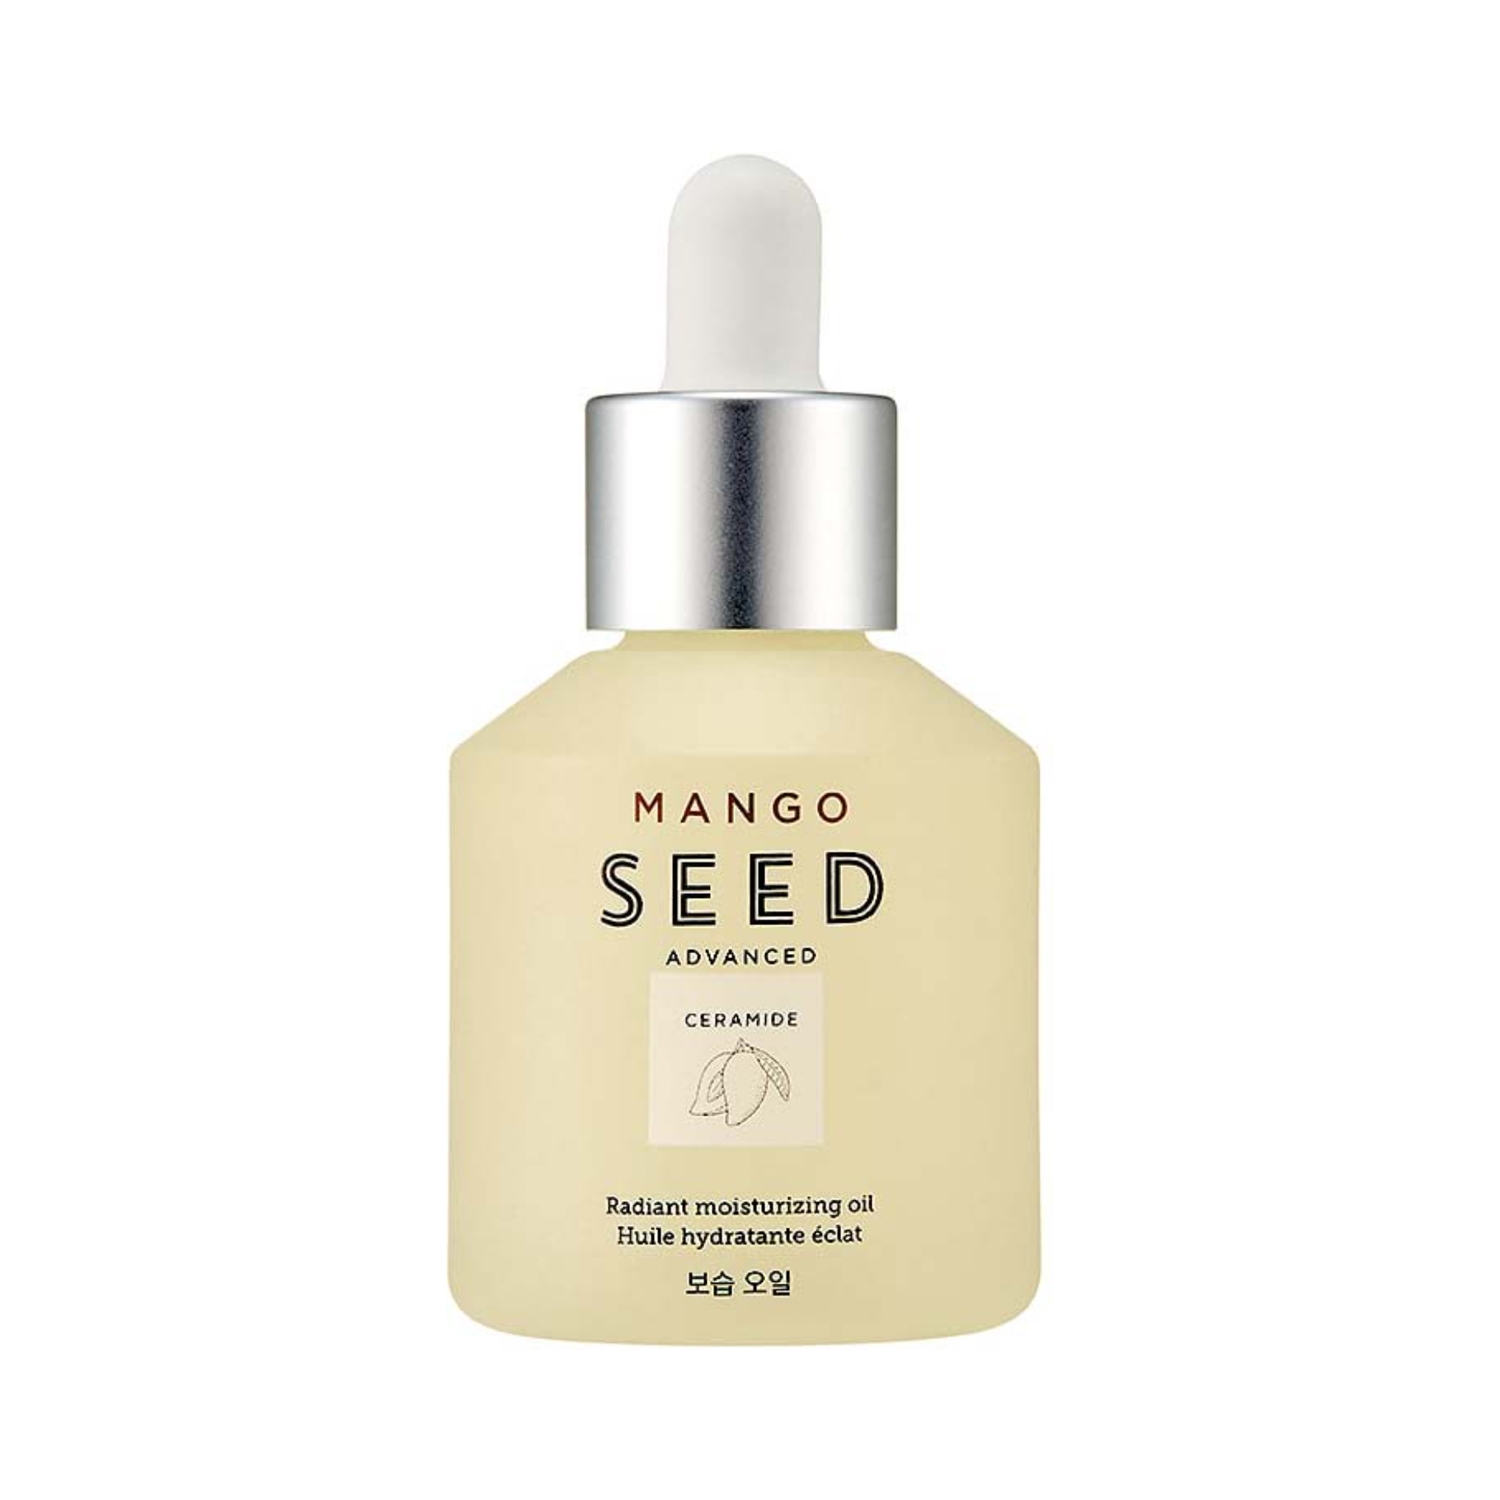 The Face Shop Mango Seed Radiant Moisturizing Oil (40ml)